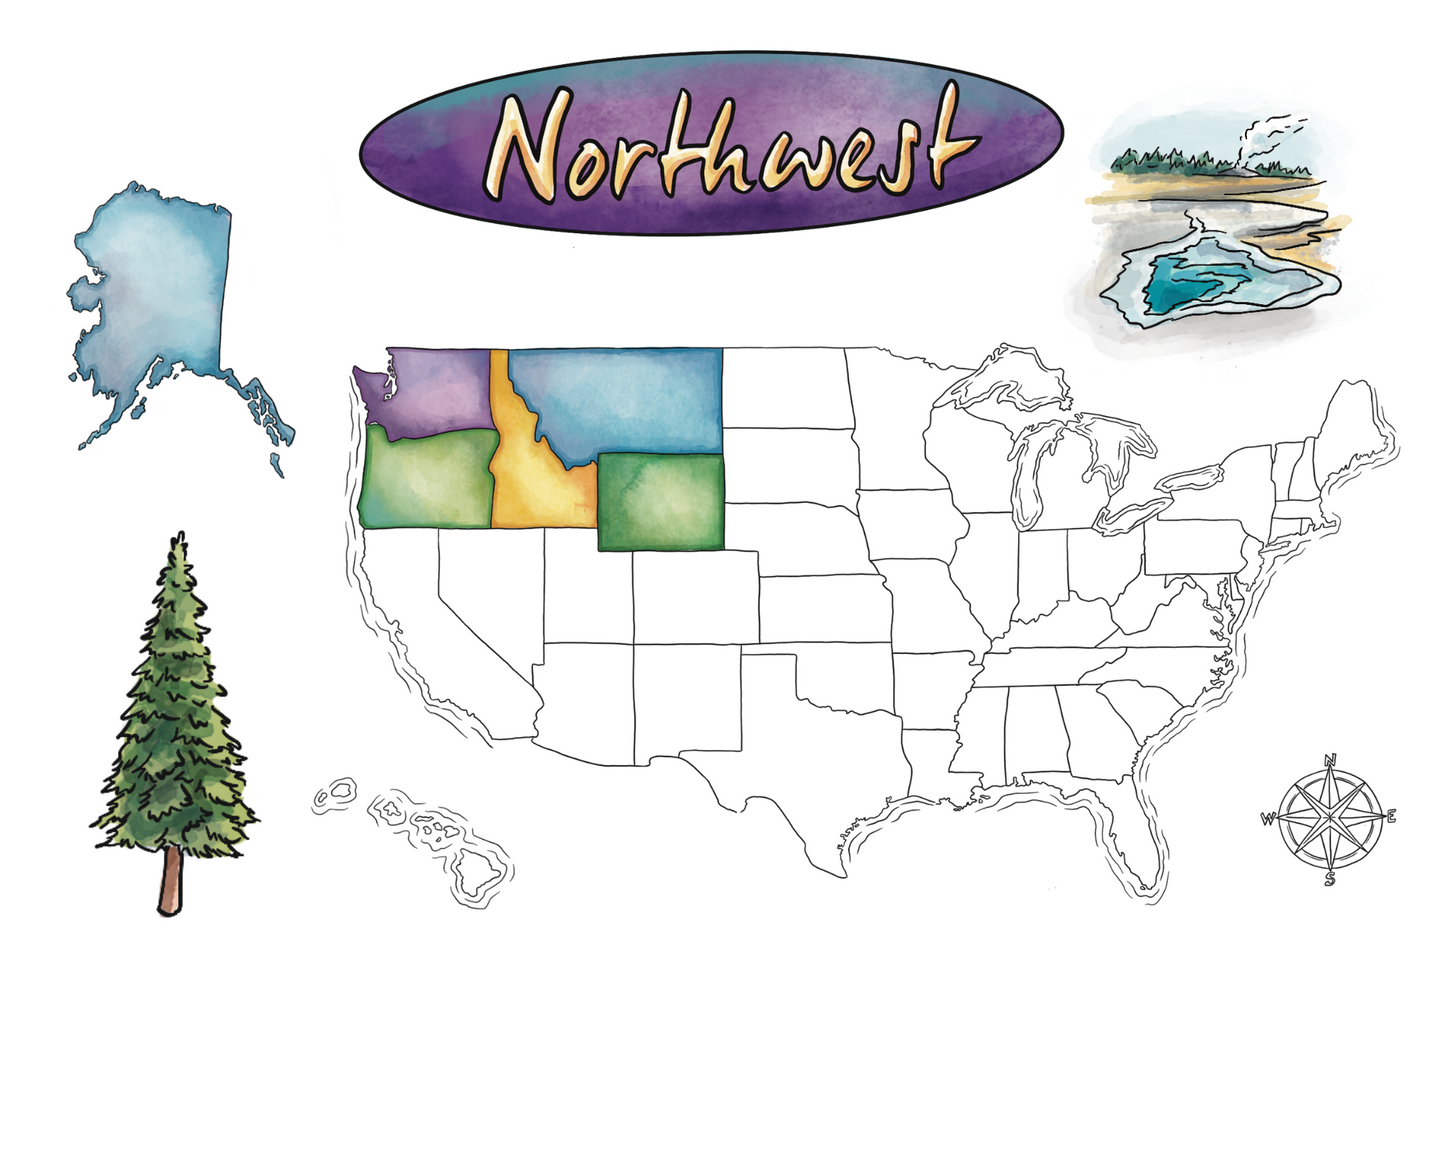 Our 50 States Full Unit Study: NORTHWEST